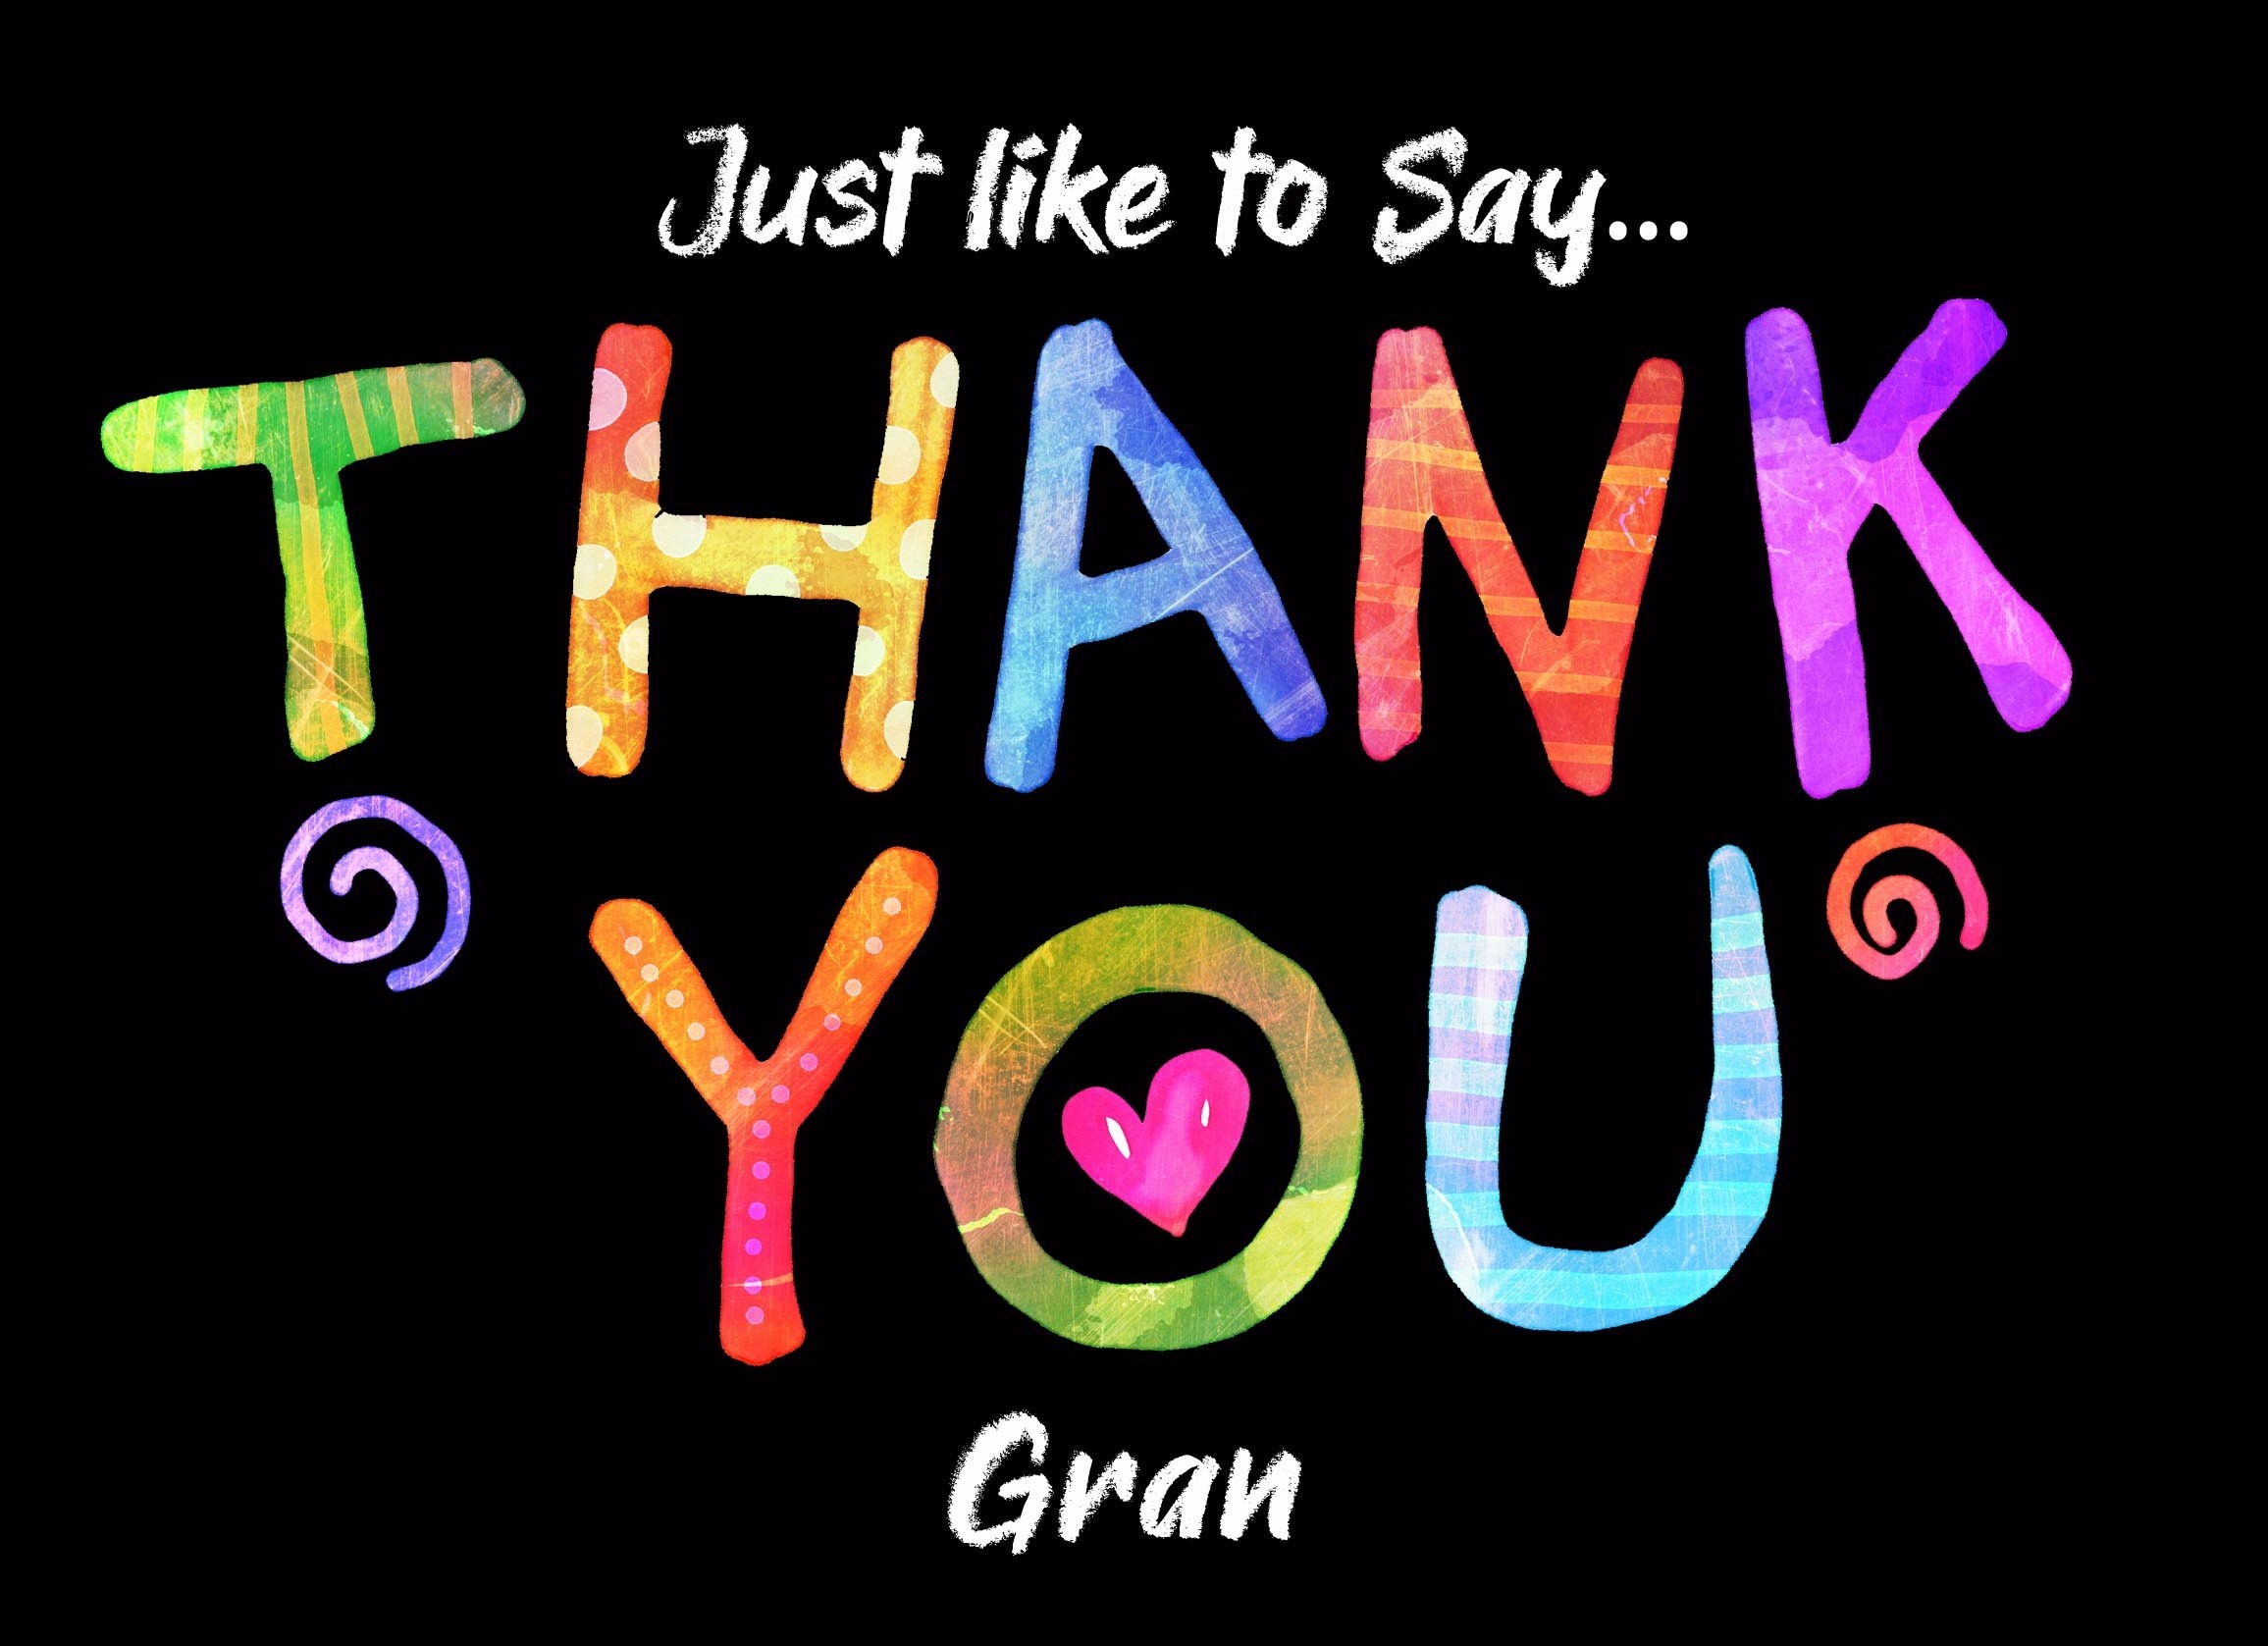 Thank You 'Gran' Greeting Card